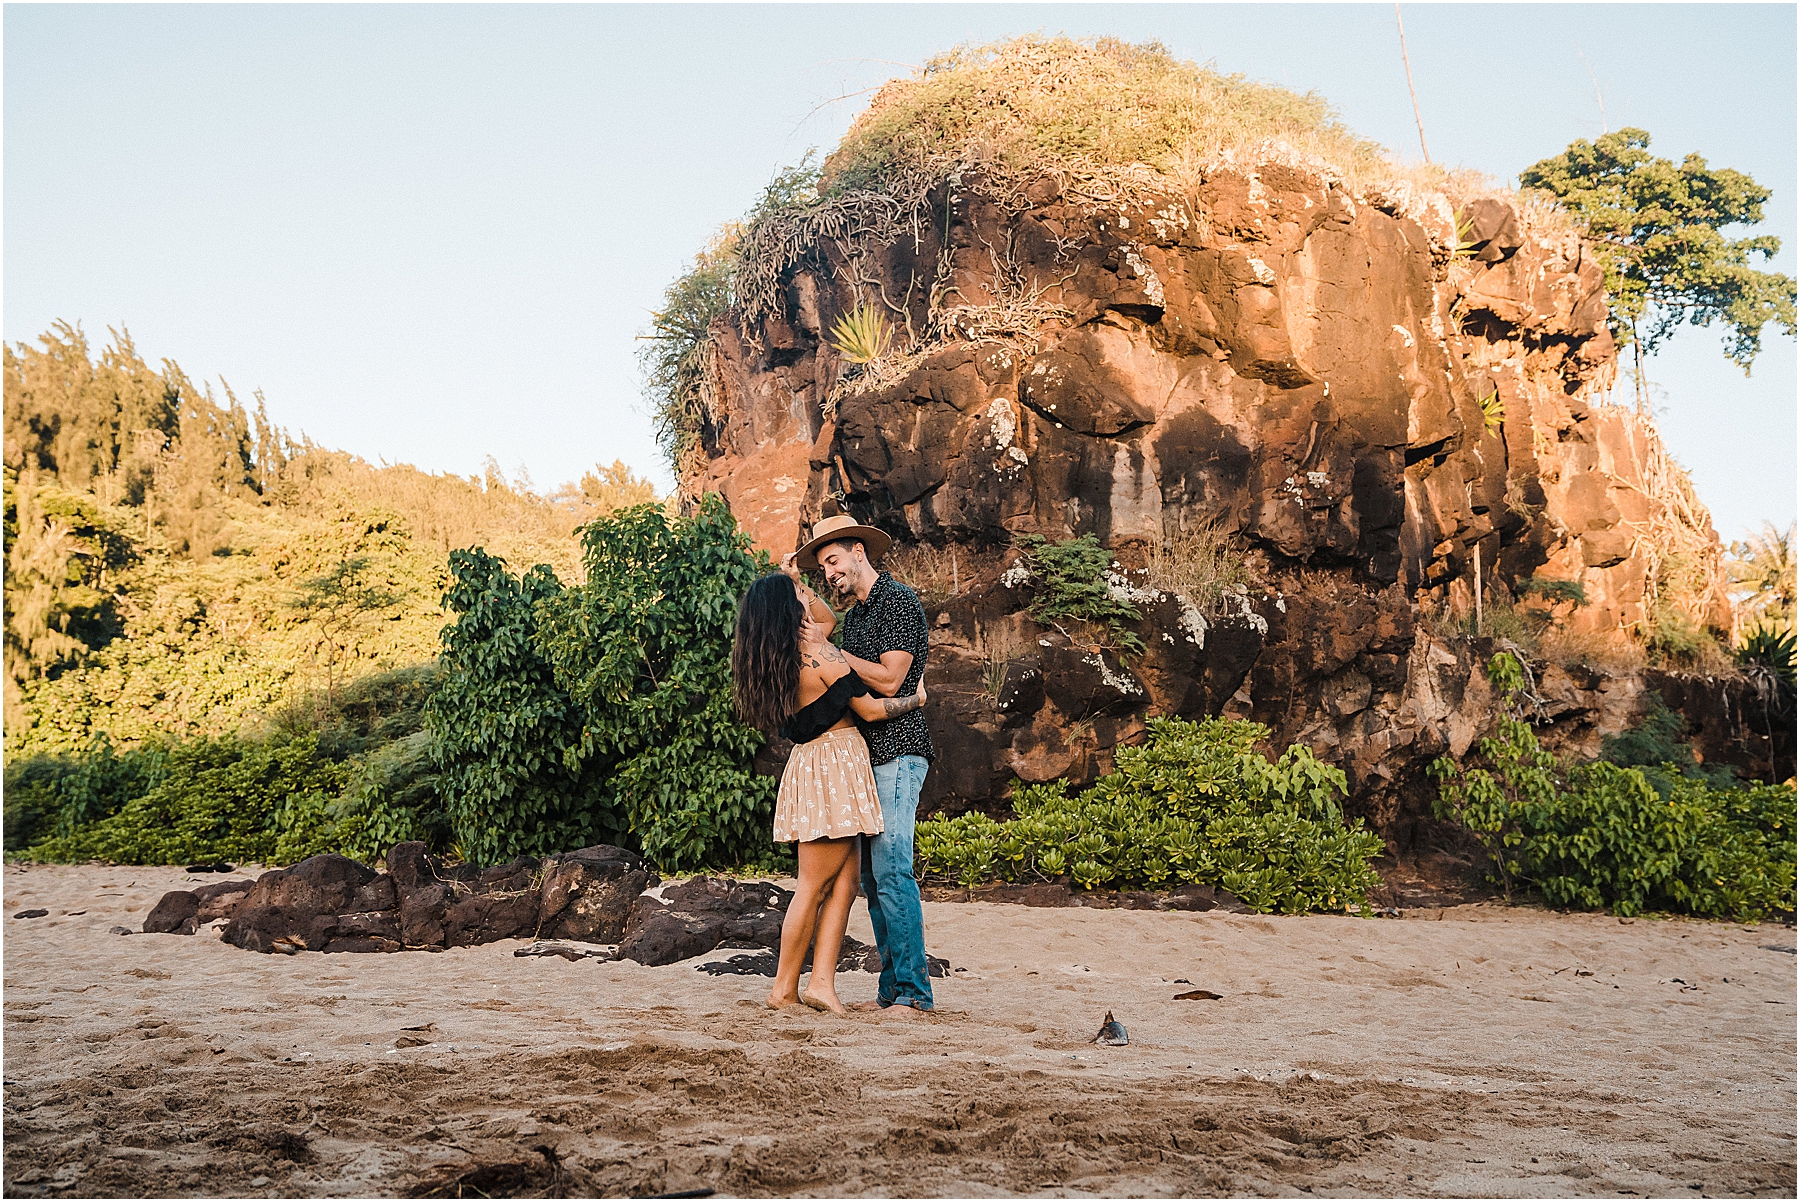 Kauai sunrise beach couples anniversary pictures